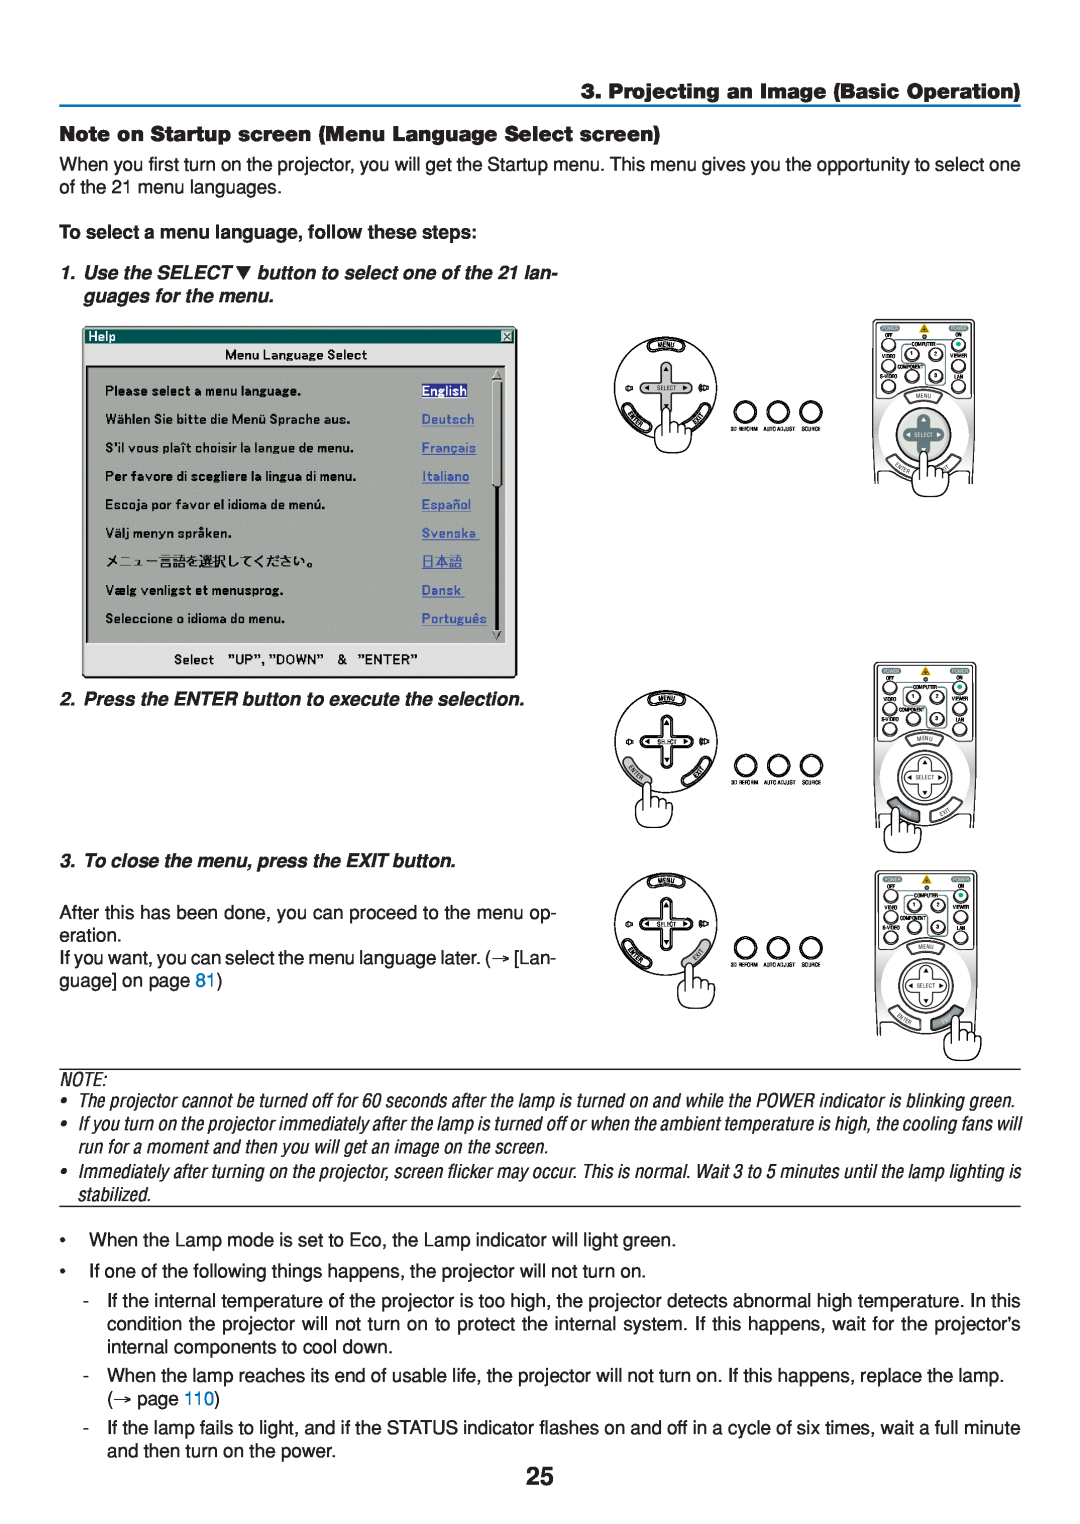 Dukane 8808 user manual Projecting an Image Basic Operation, Note on Startup screen Menu Language Select screen 